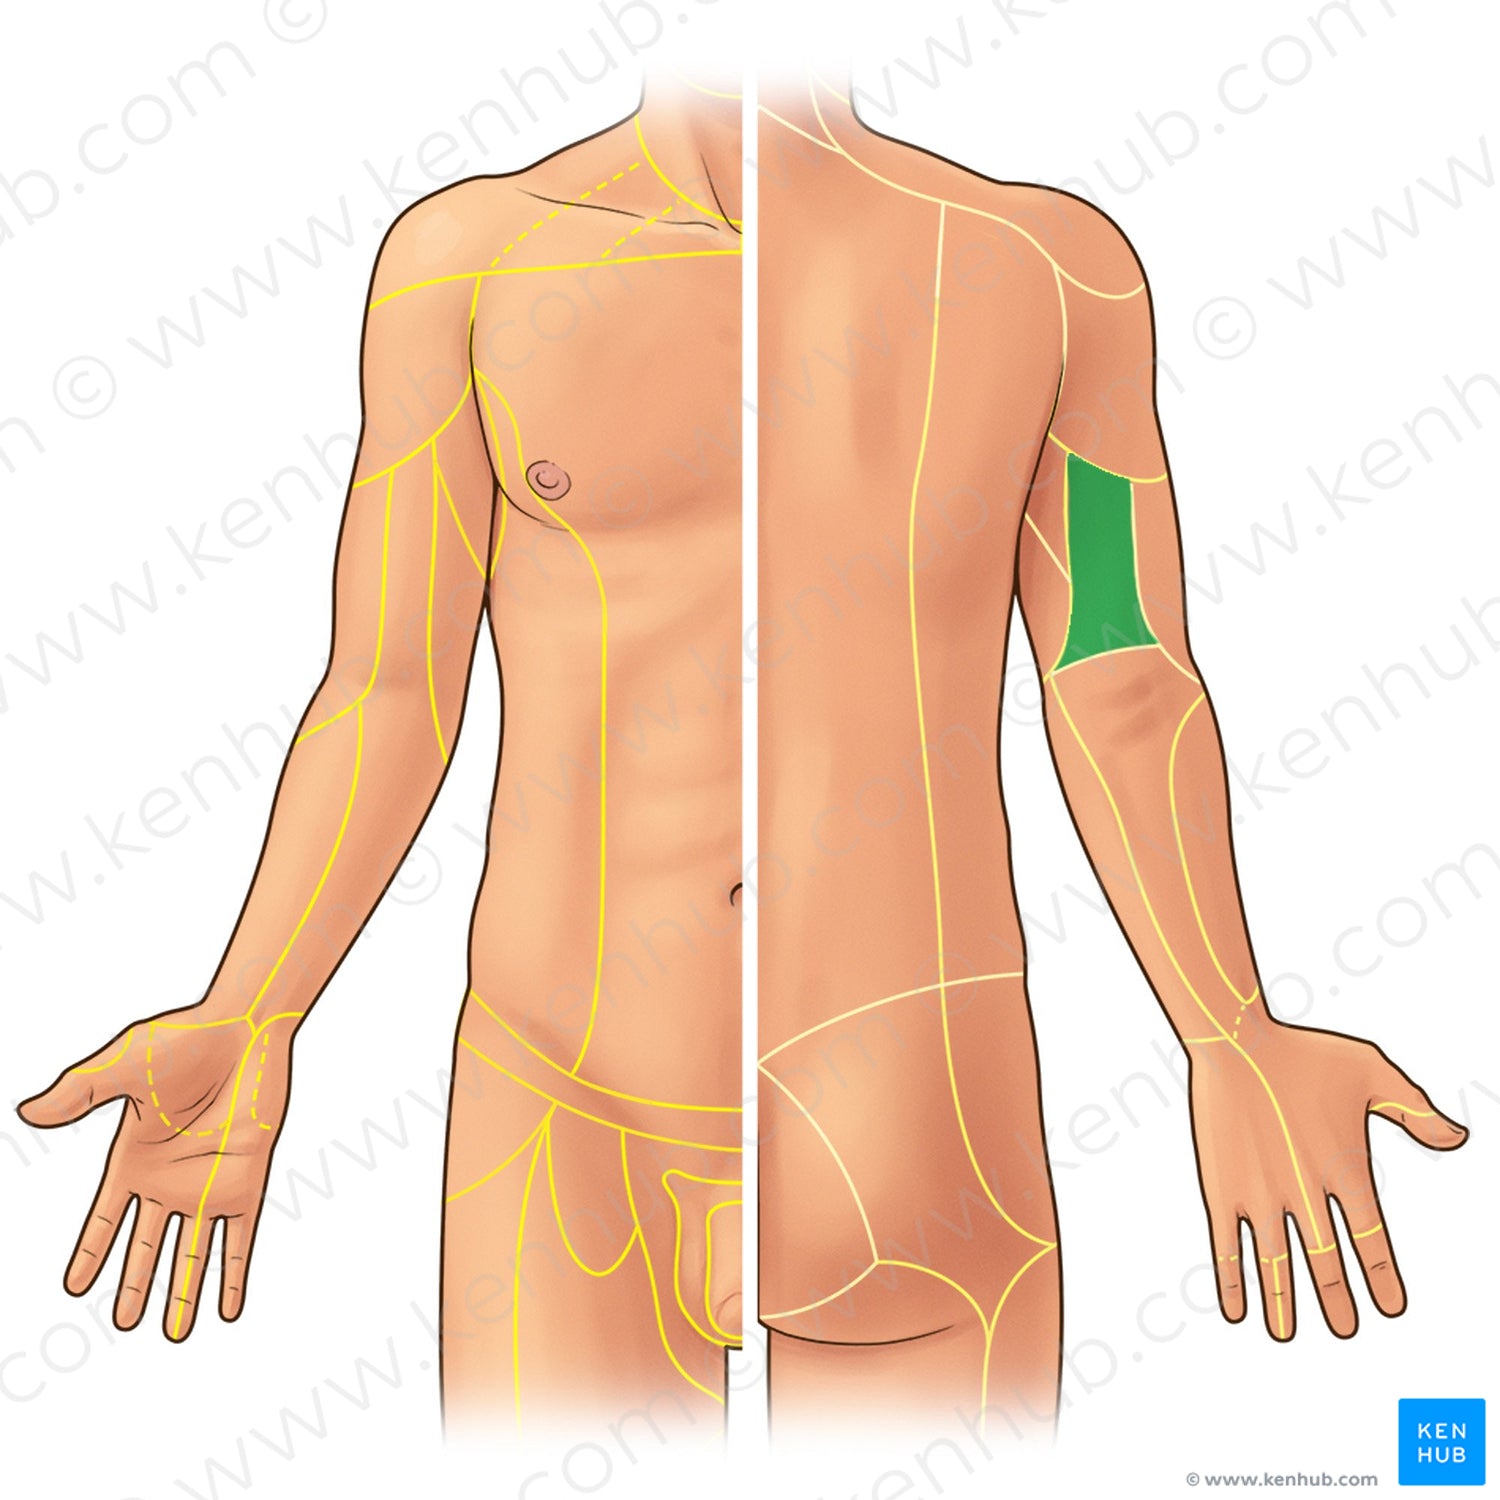 Posterior brachial cutaneous nerve (#21927)